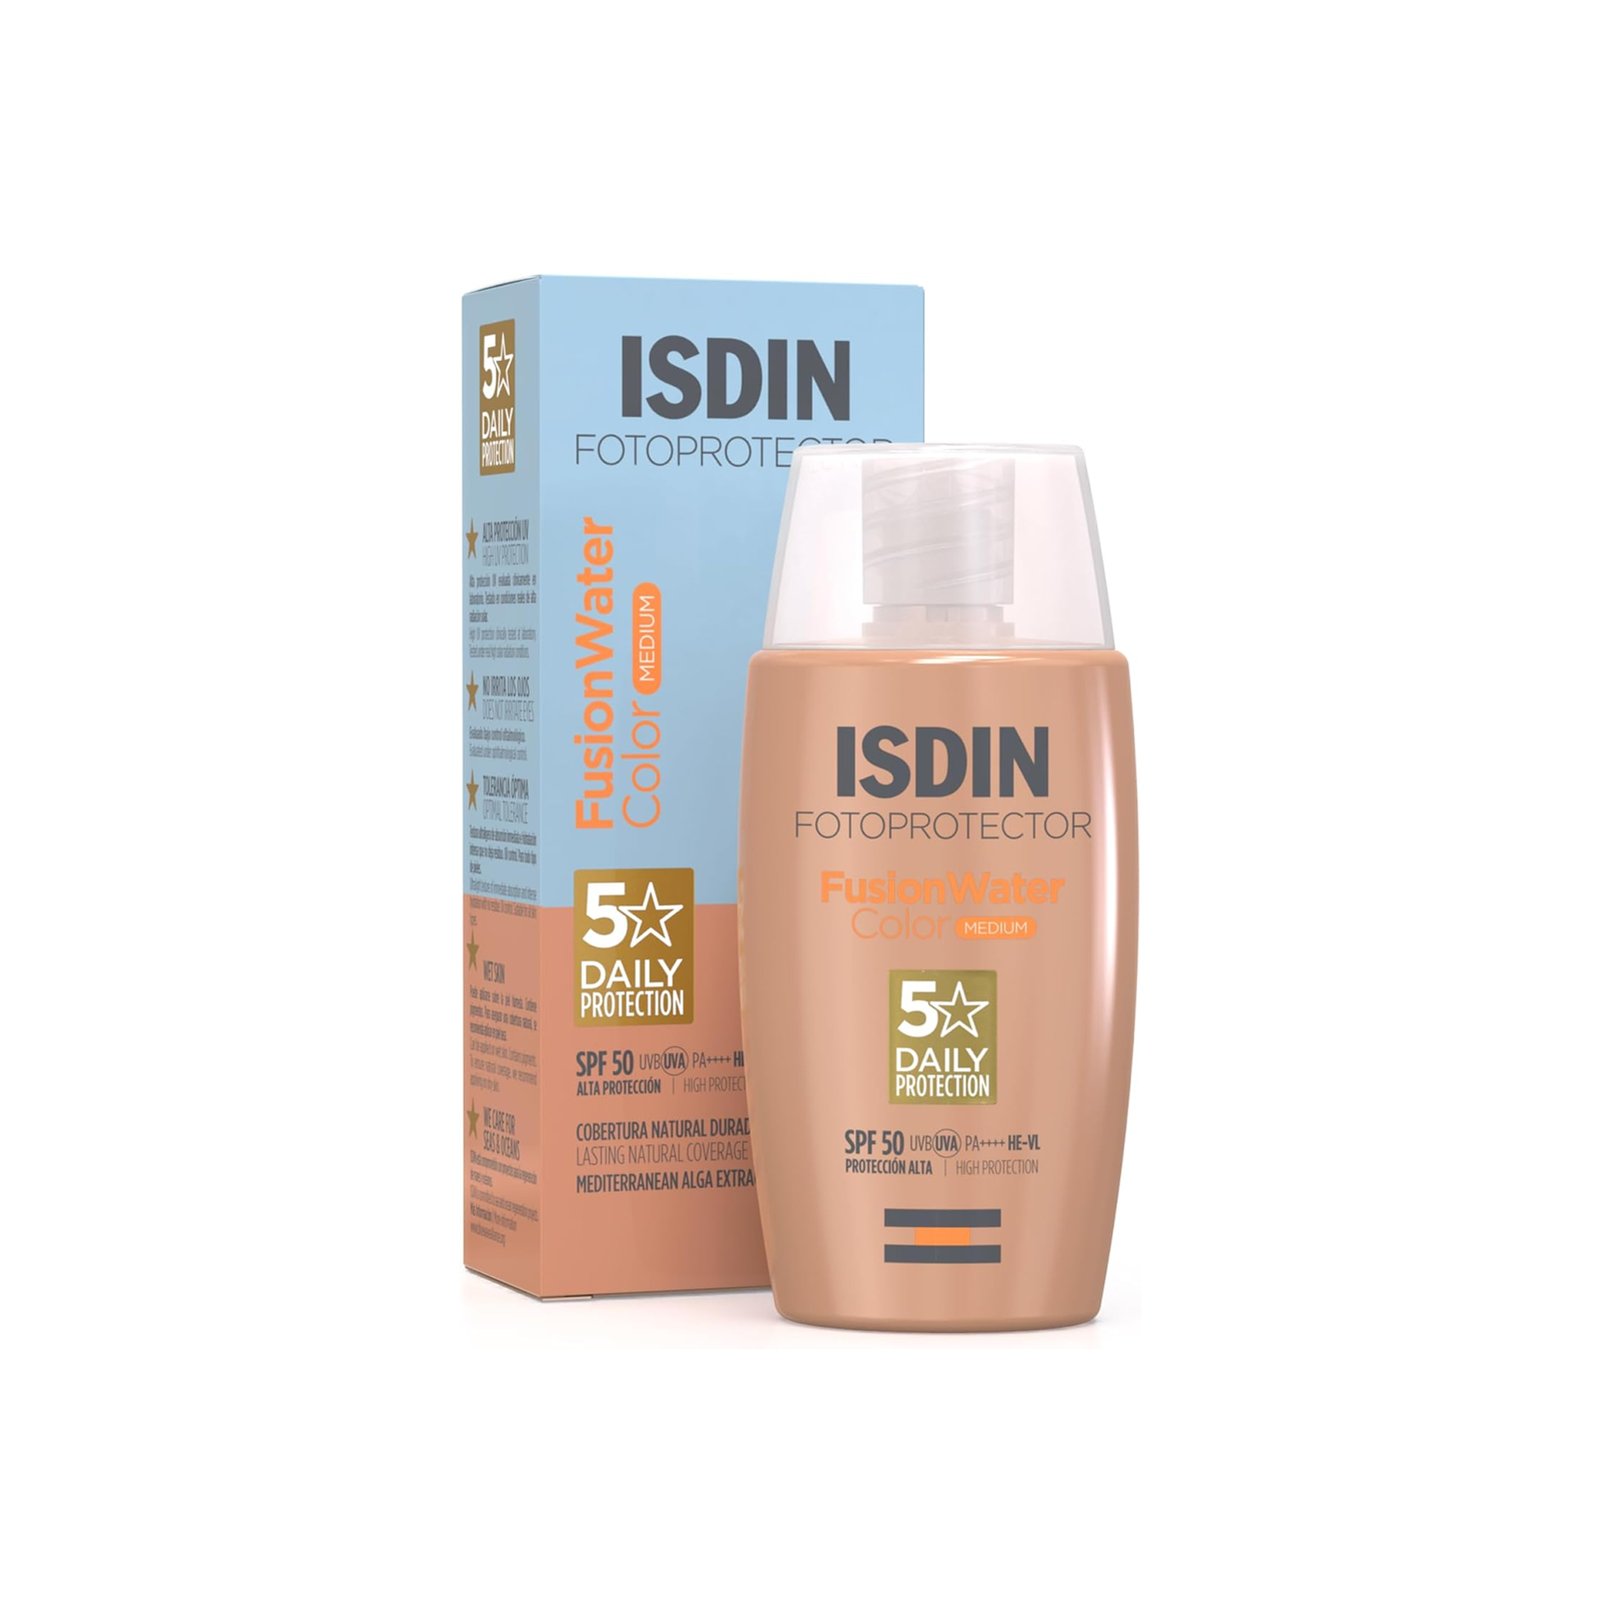 ISDIN Fotoprotector Fusion Water Color Medium SPF50 50ml